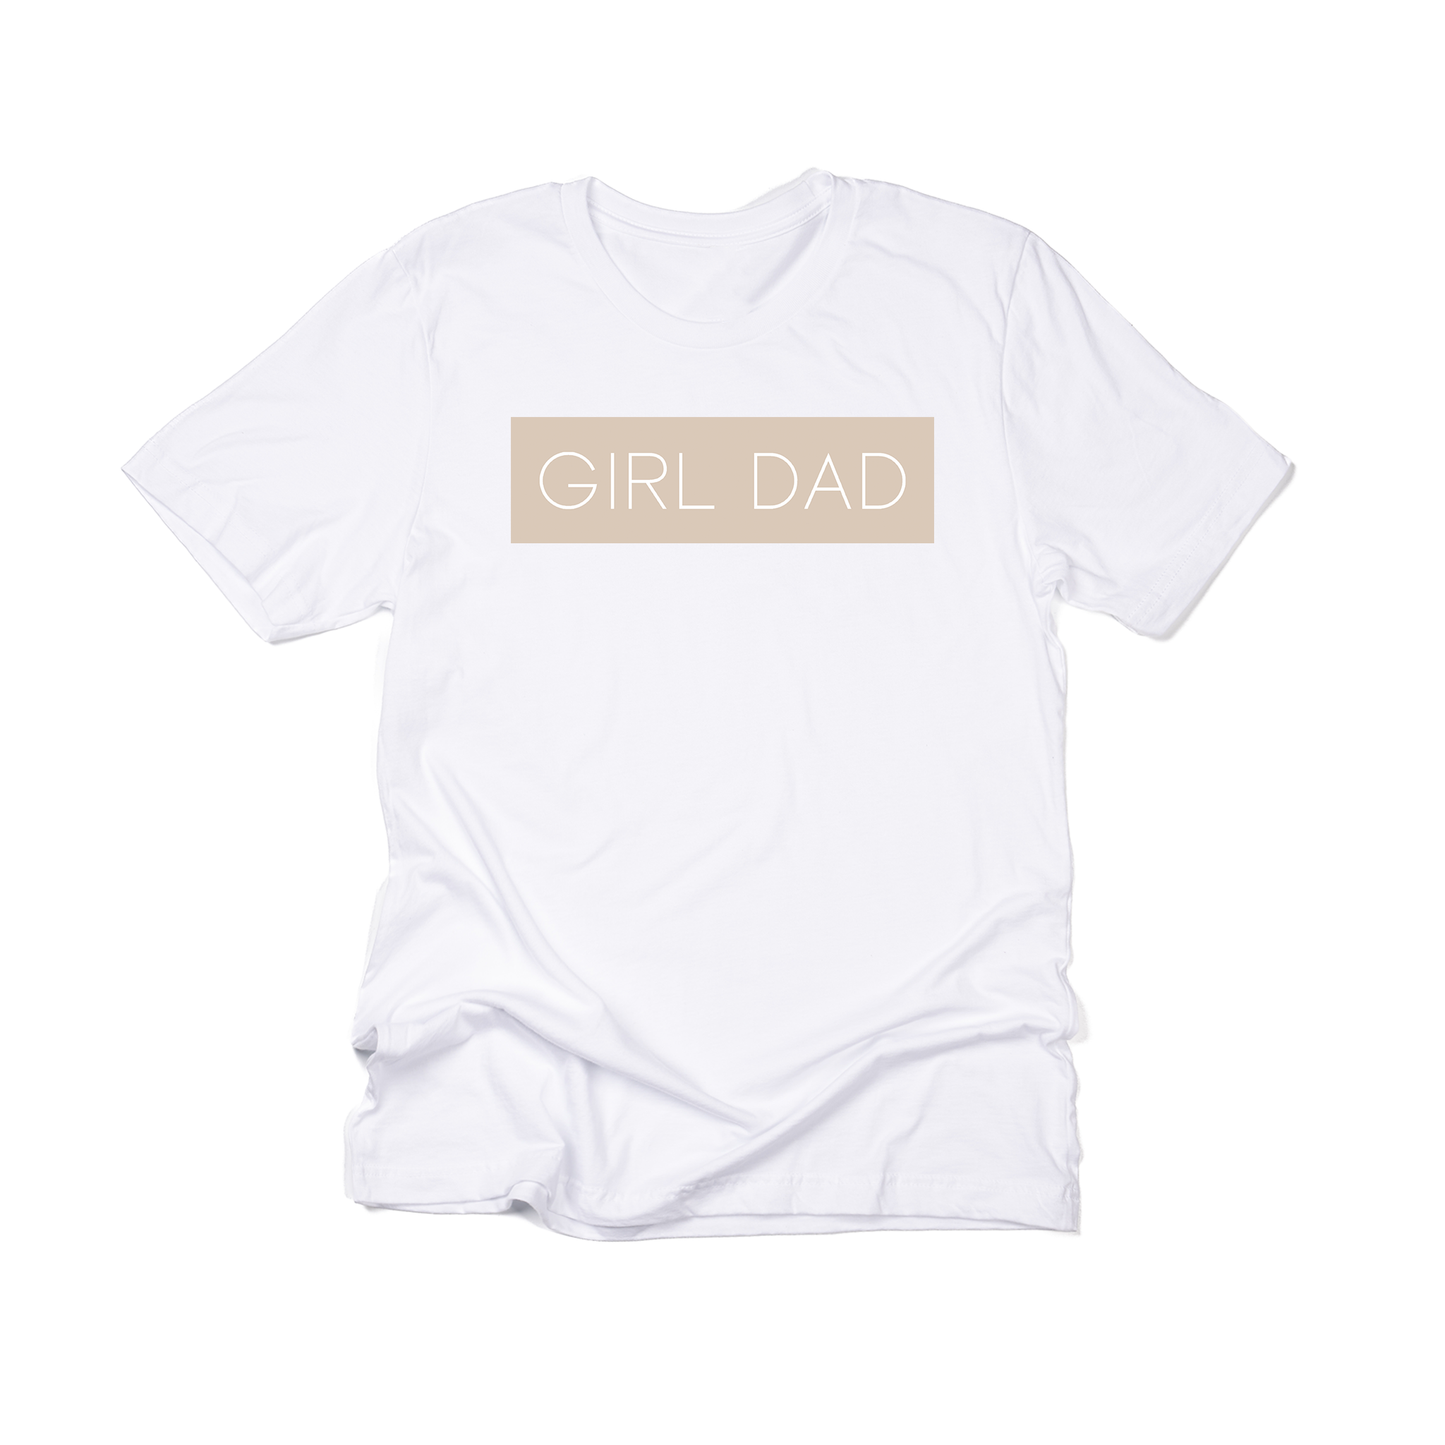 Girl Dad® (Boxed Collection, Stone Box/White Text) - Tee (White)